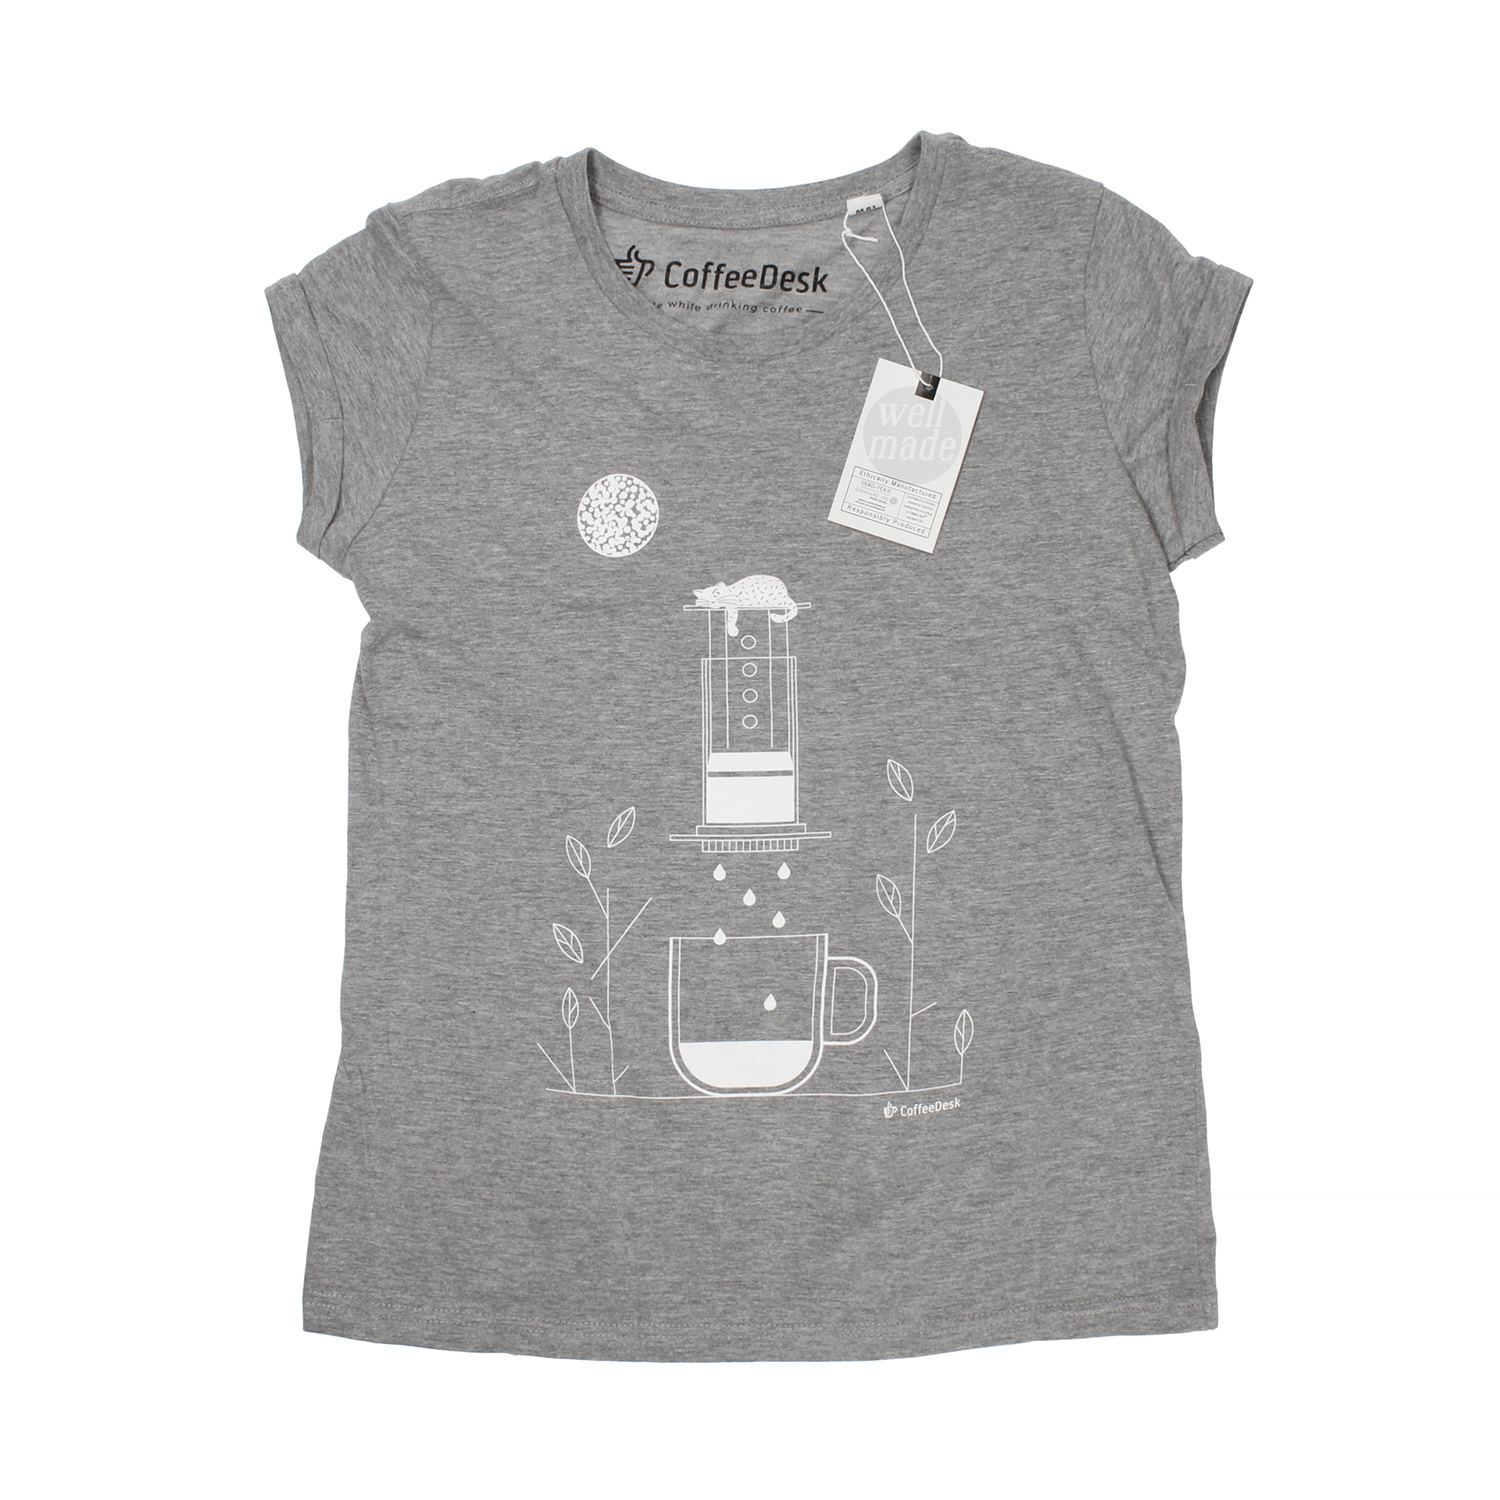 Coffeedesk AeroPress Women's Grey T-shirt - M